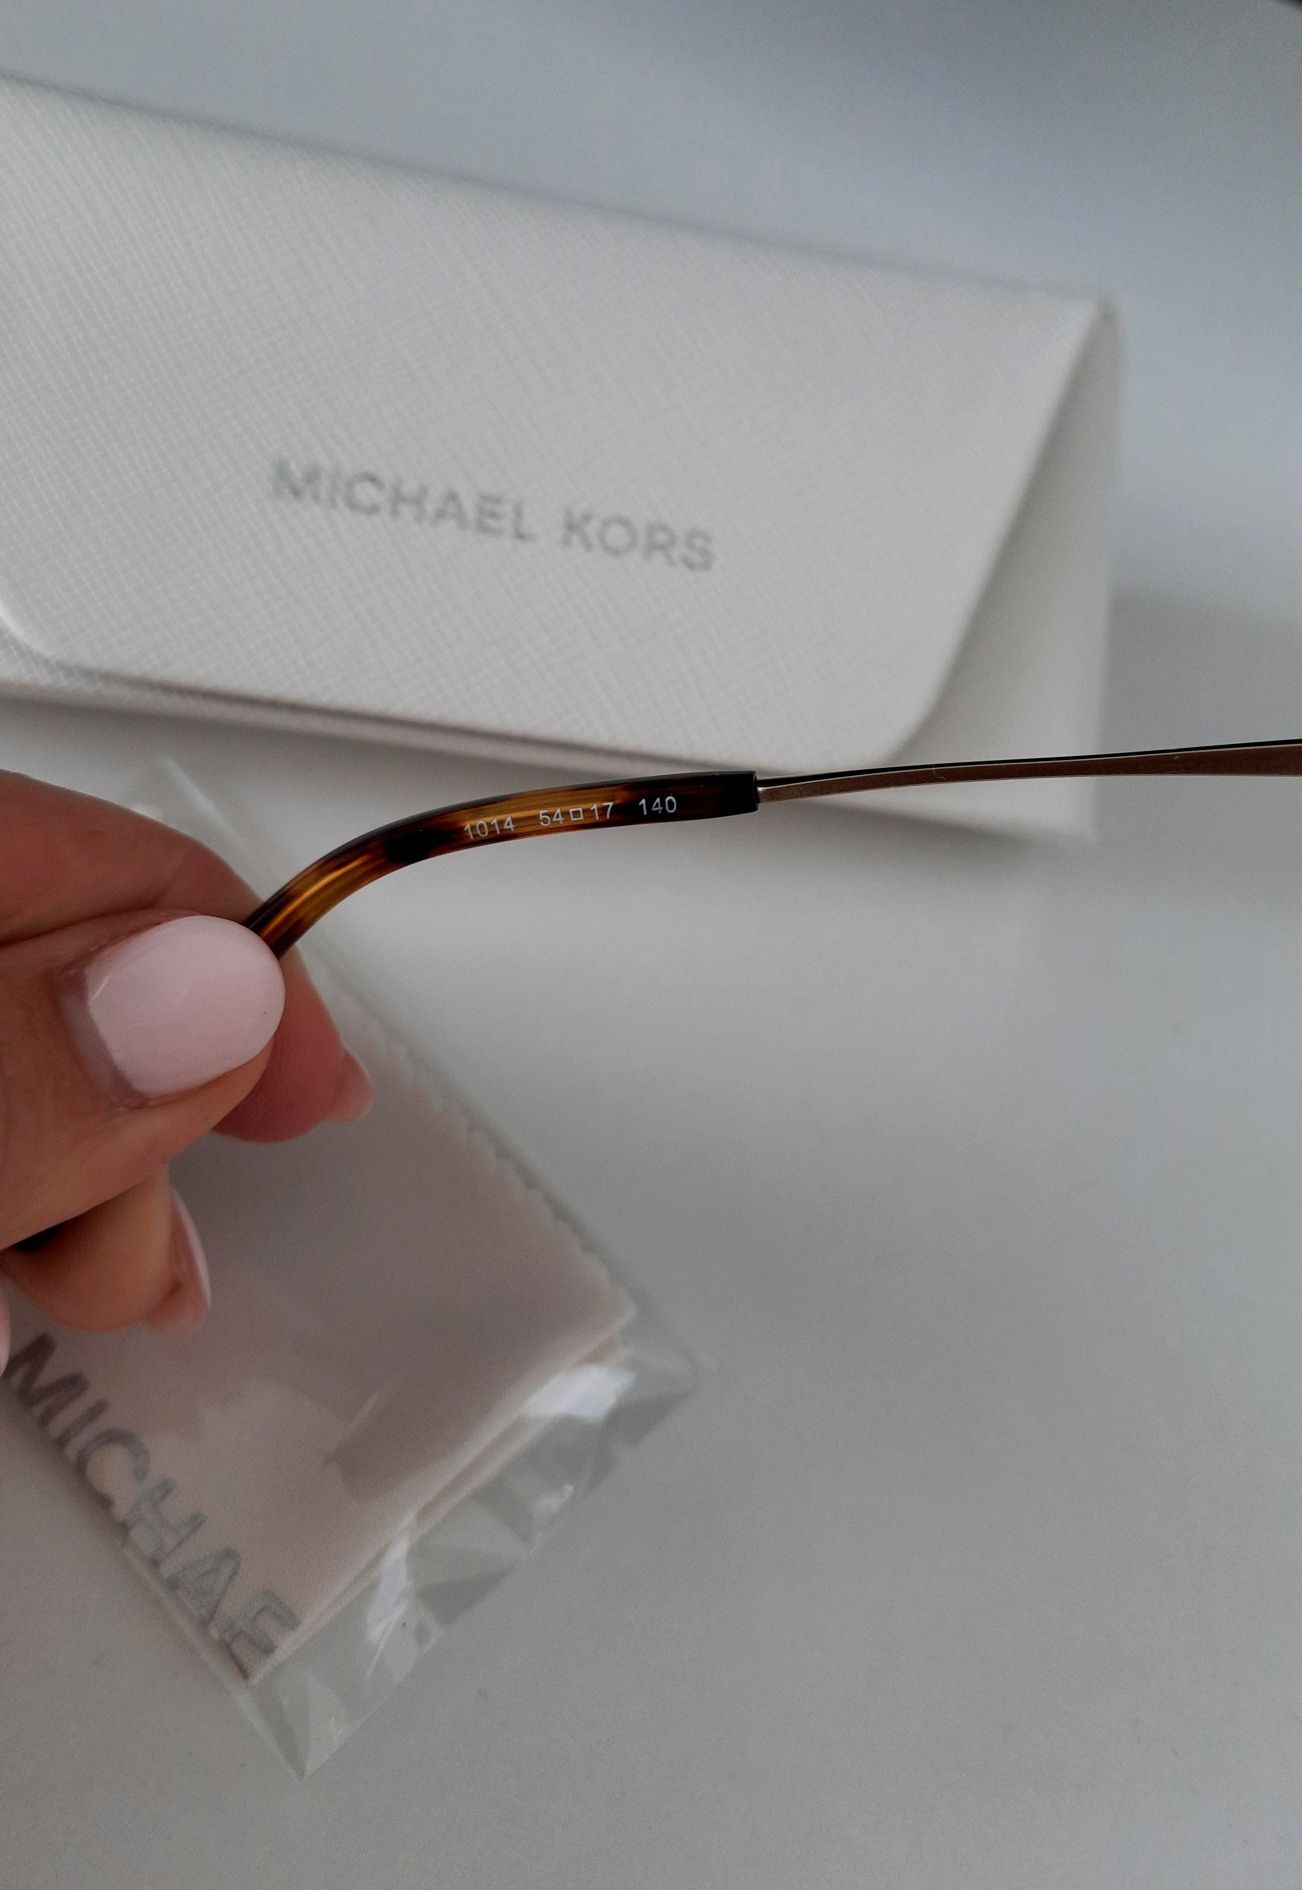 MK Michael Kors Nowe oryginalne duże zlote oprawki okulary 3062 54